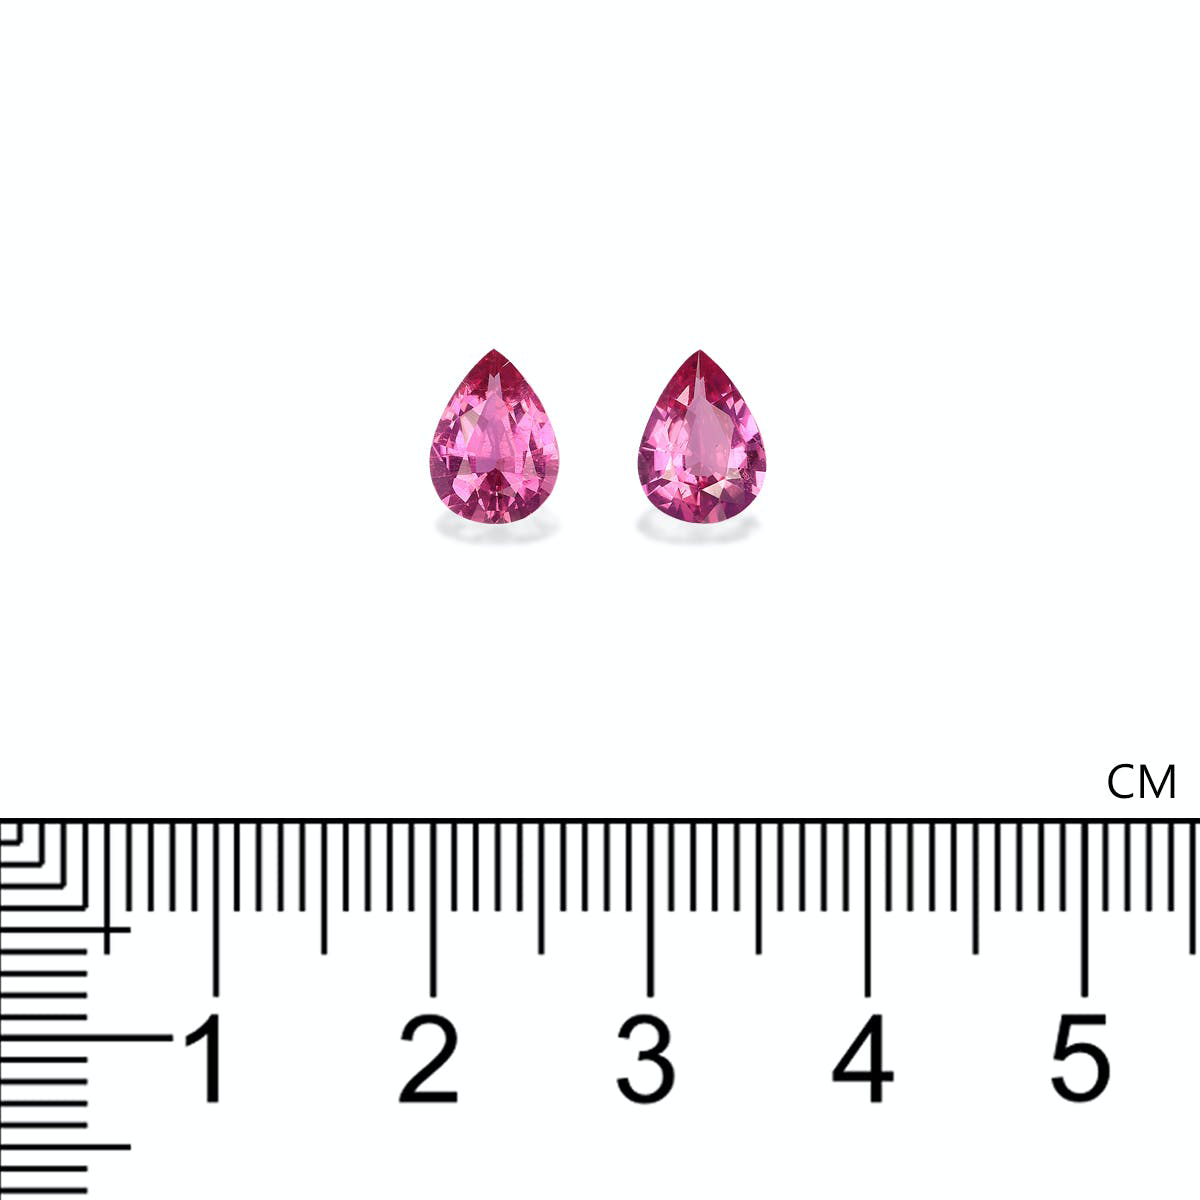 Fuscia Pink Rubellite Tourmaline 1.68ct - 8x6mm Pair (RL1289)